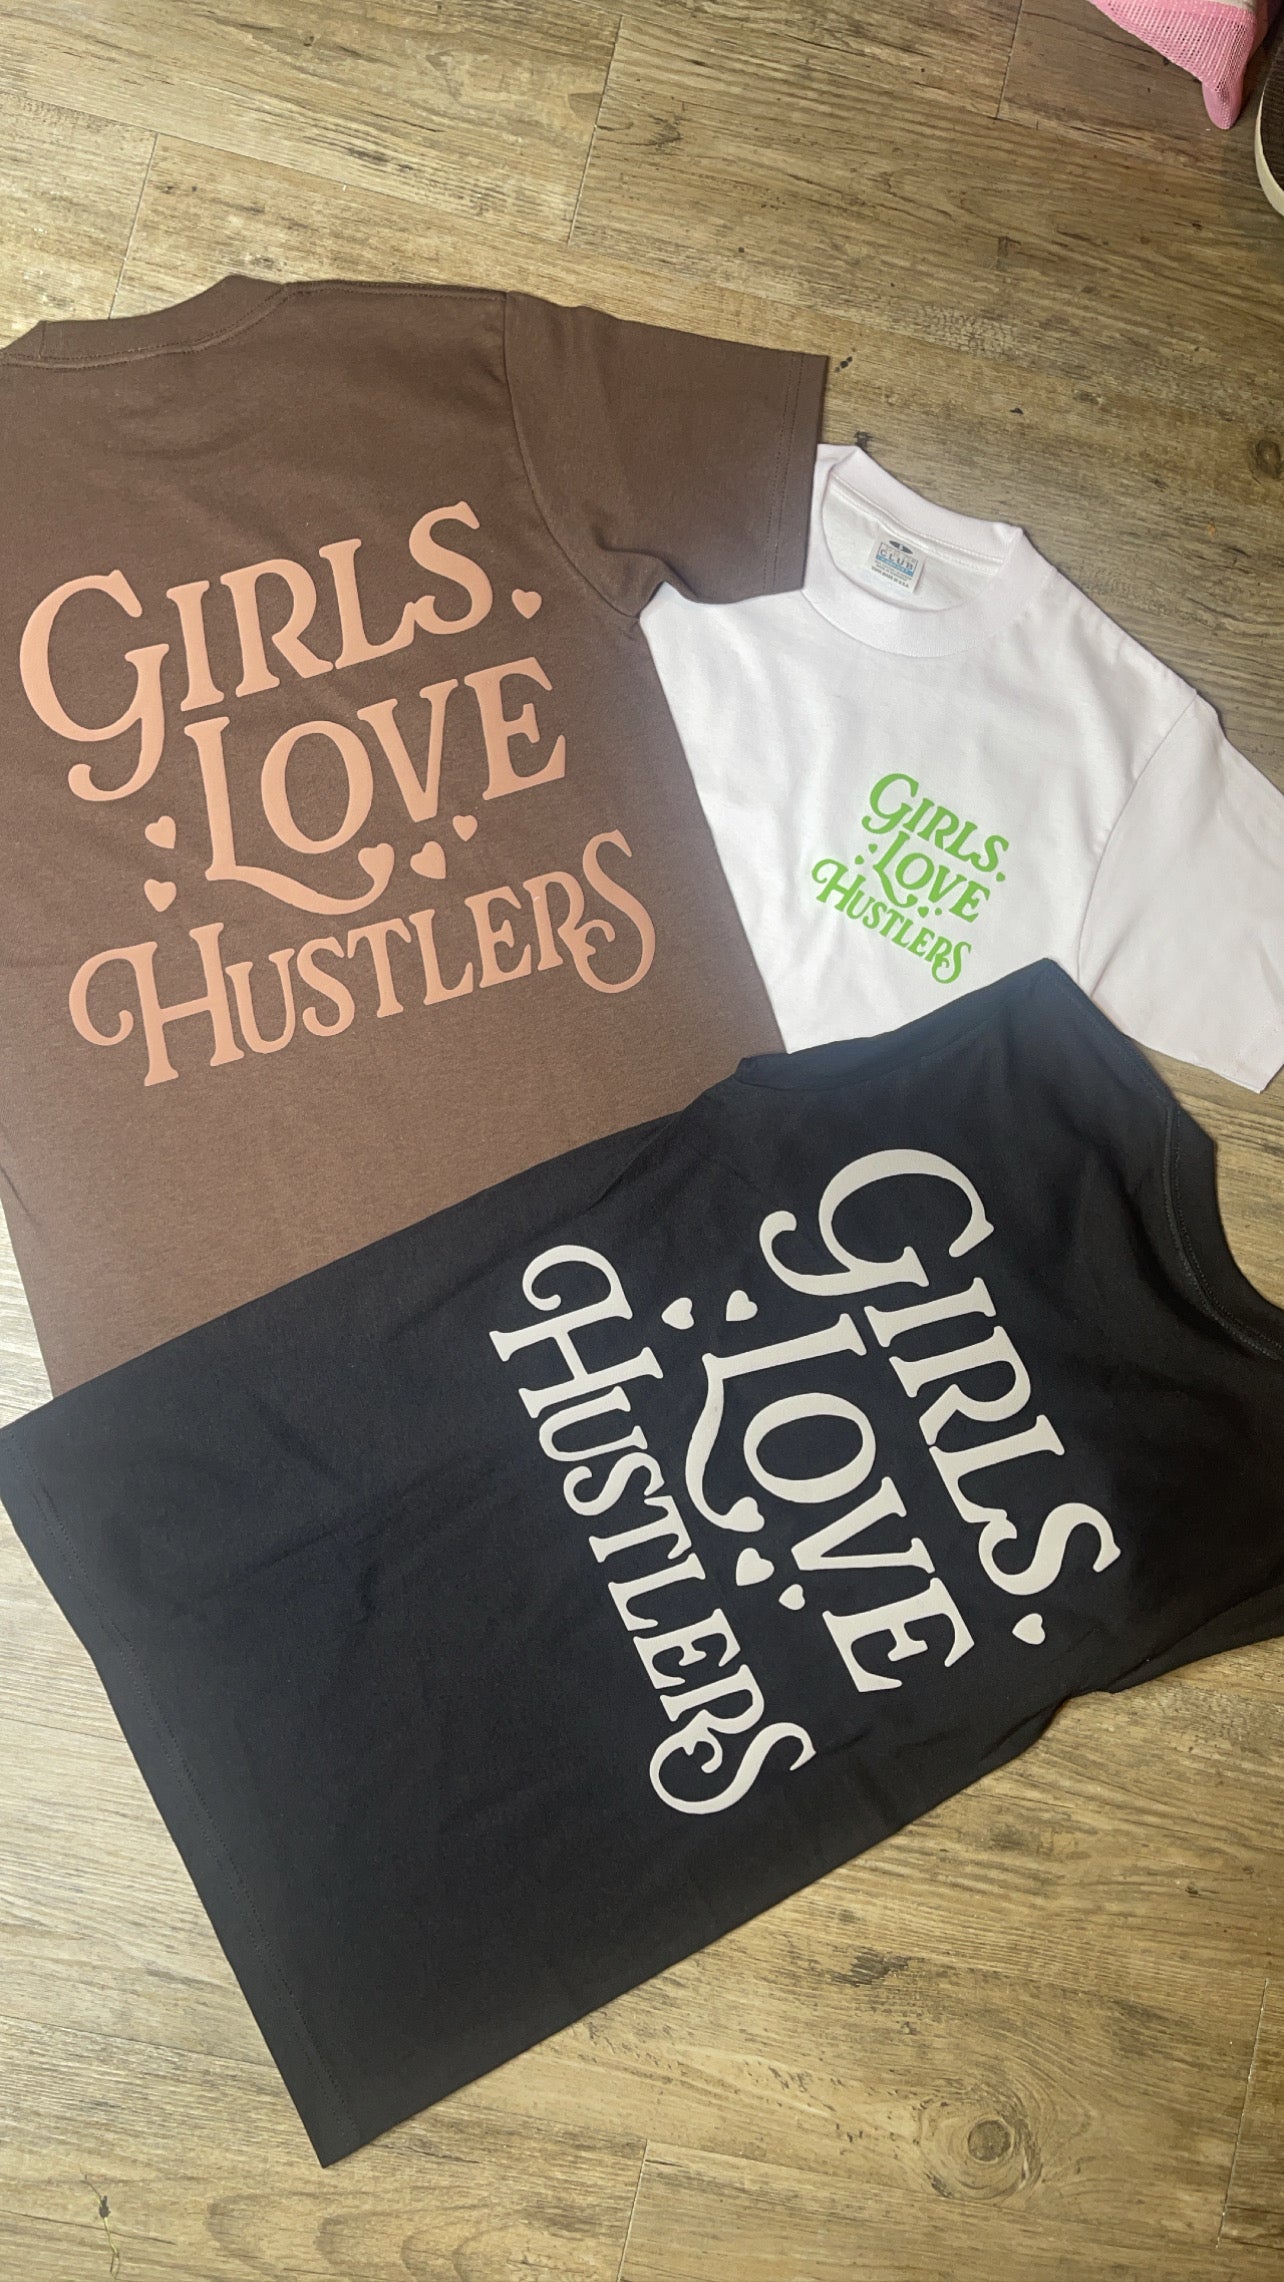 OGGC L.A. Shirts La Girl Hustler Tees HussLA Tops Womens Shirt XL / Salmon Pink